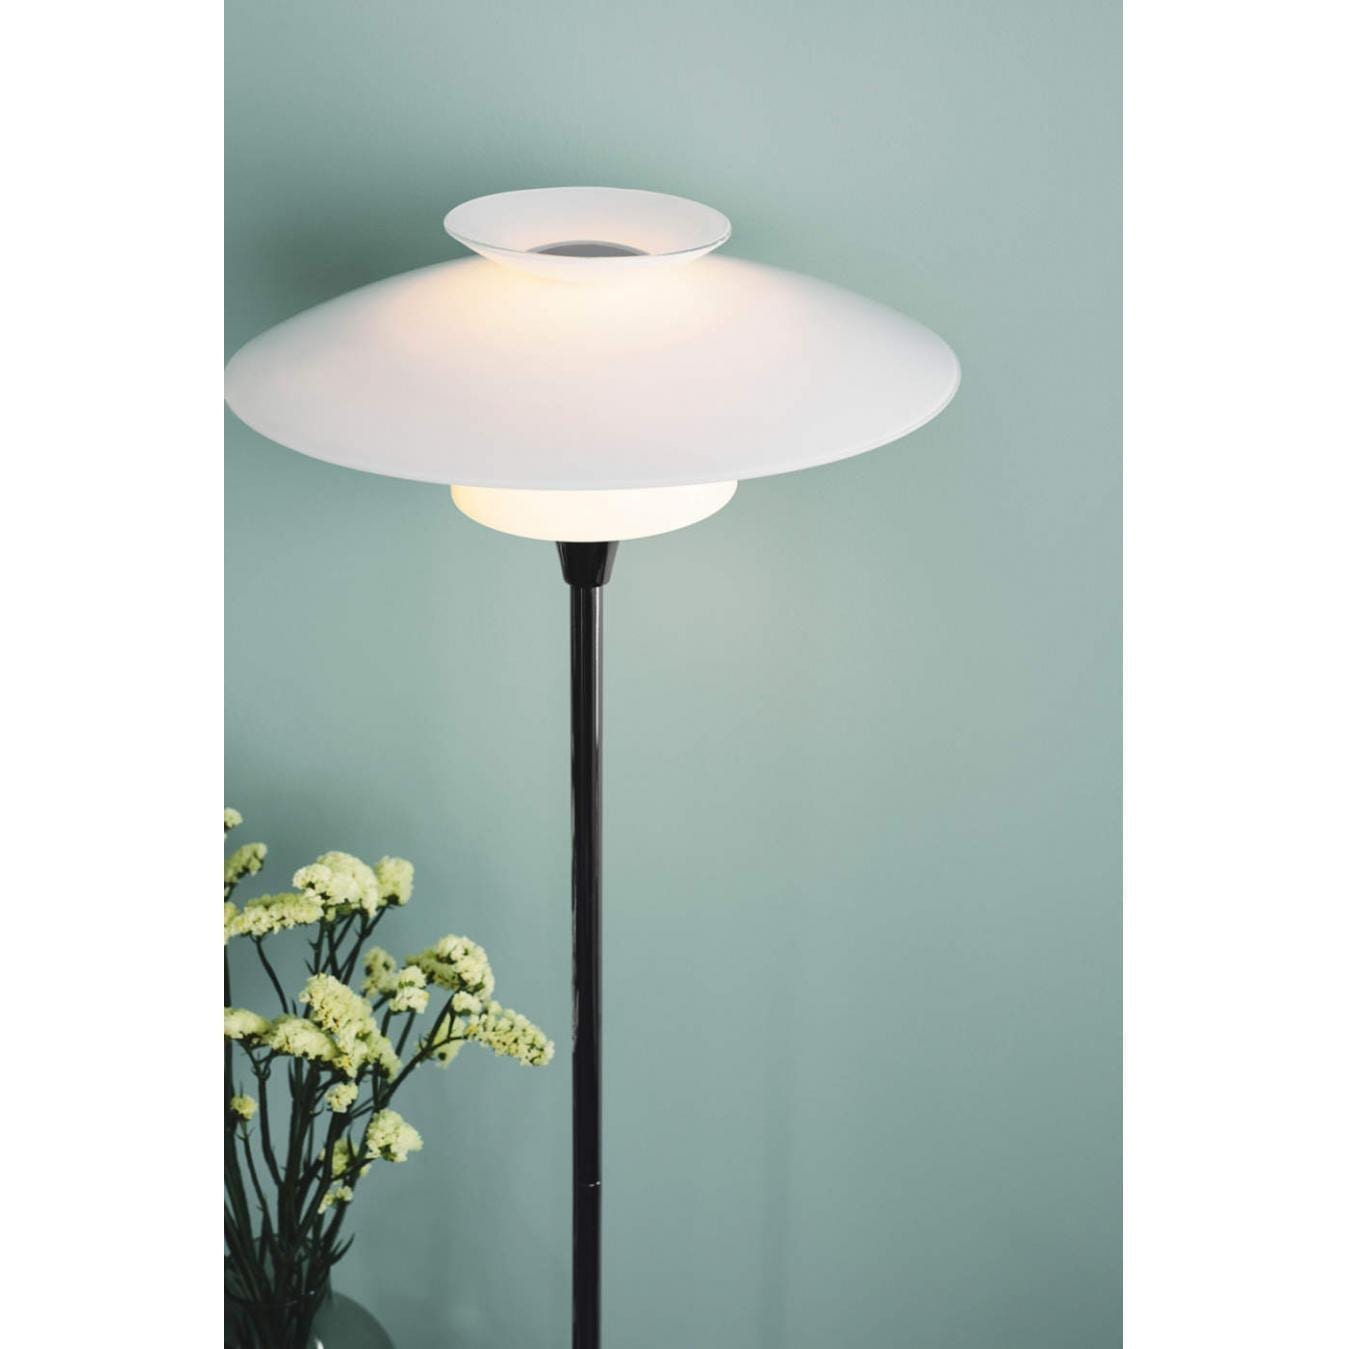 halo-design-scandinavia-floor-lamp-allolampa-innoconcept-design (1)